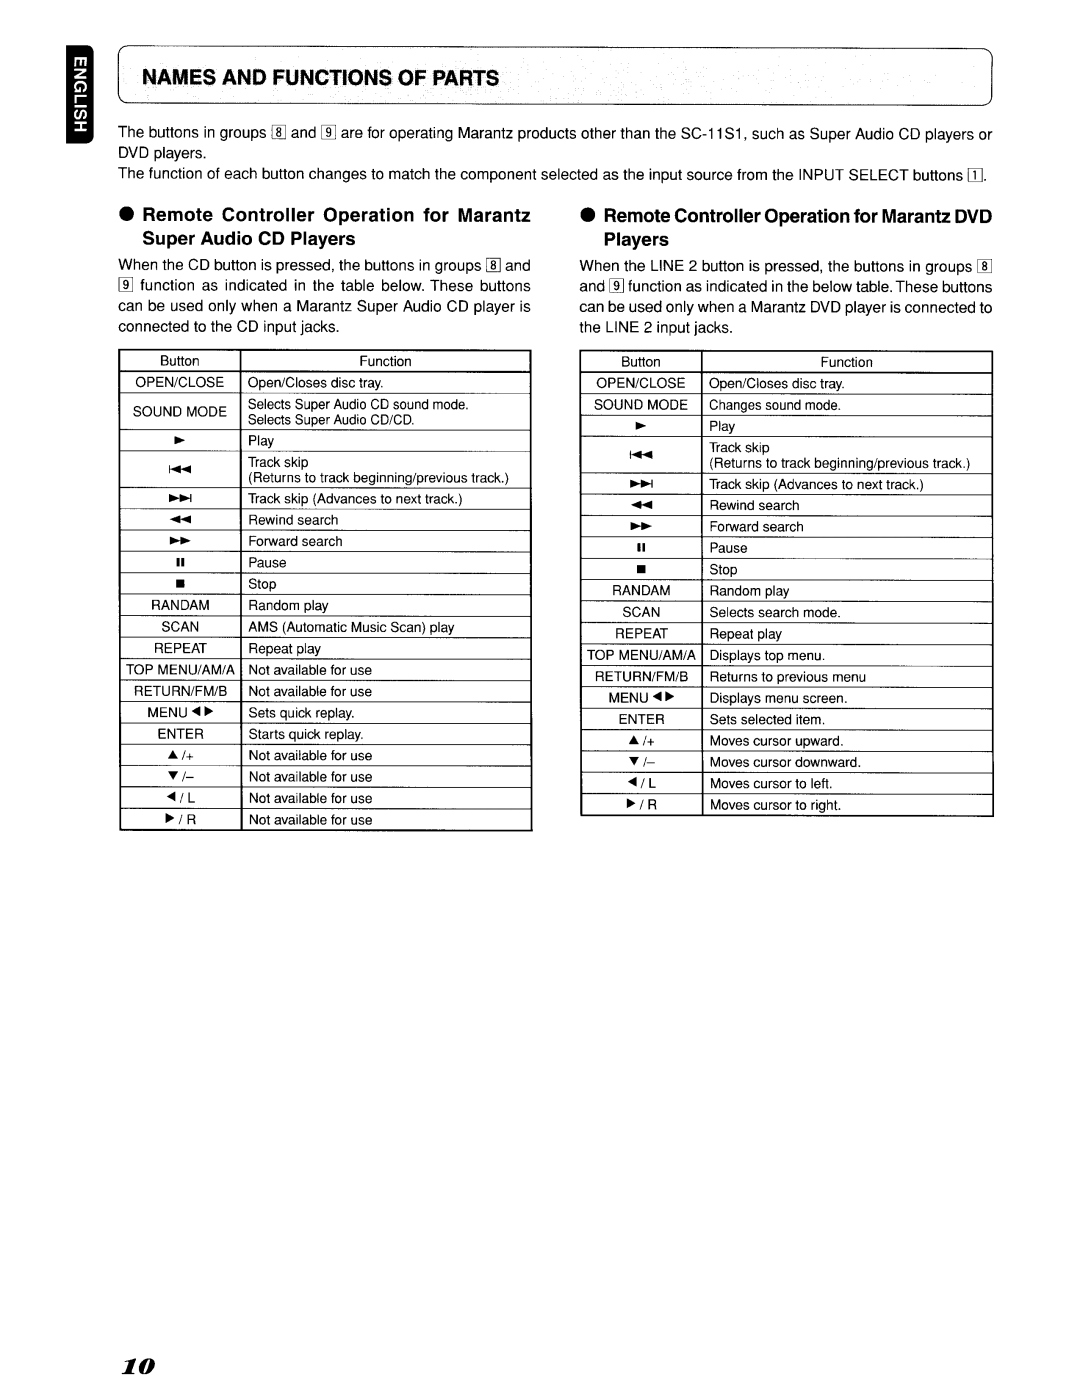 Marantz 642SC11S1, SC-11S1 manual Names And Functions Of Parts 